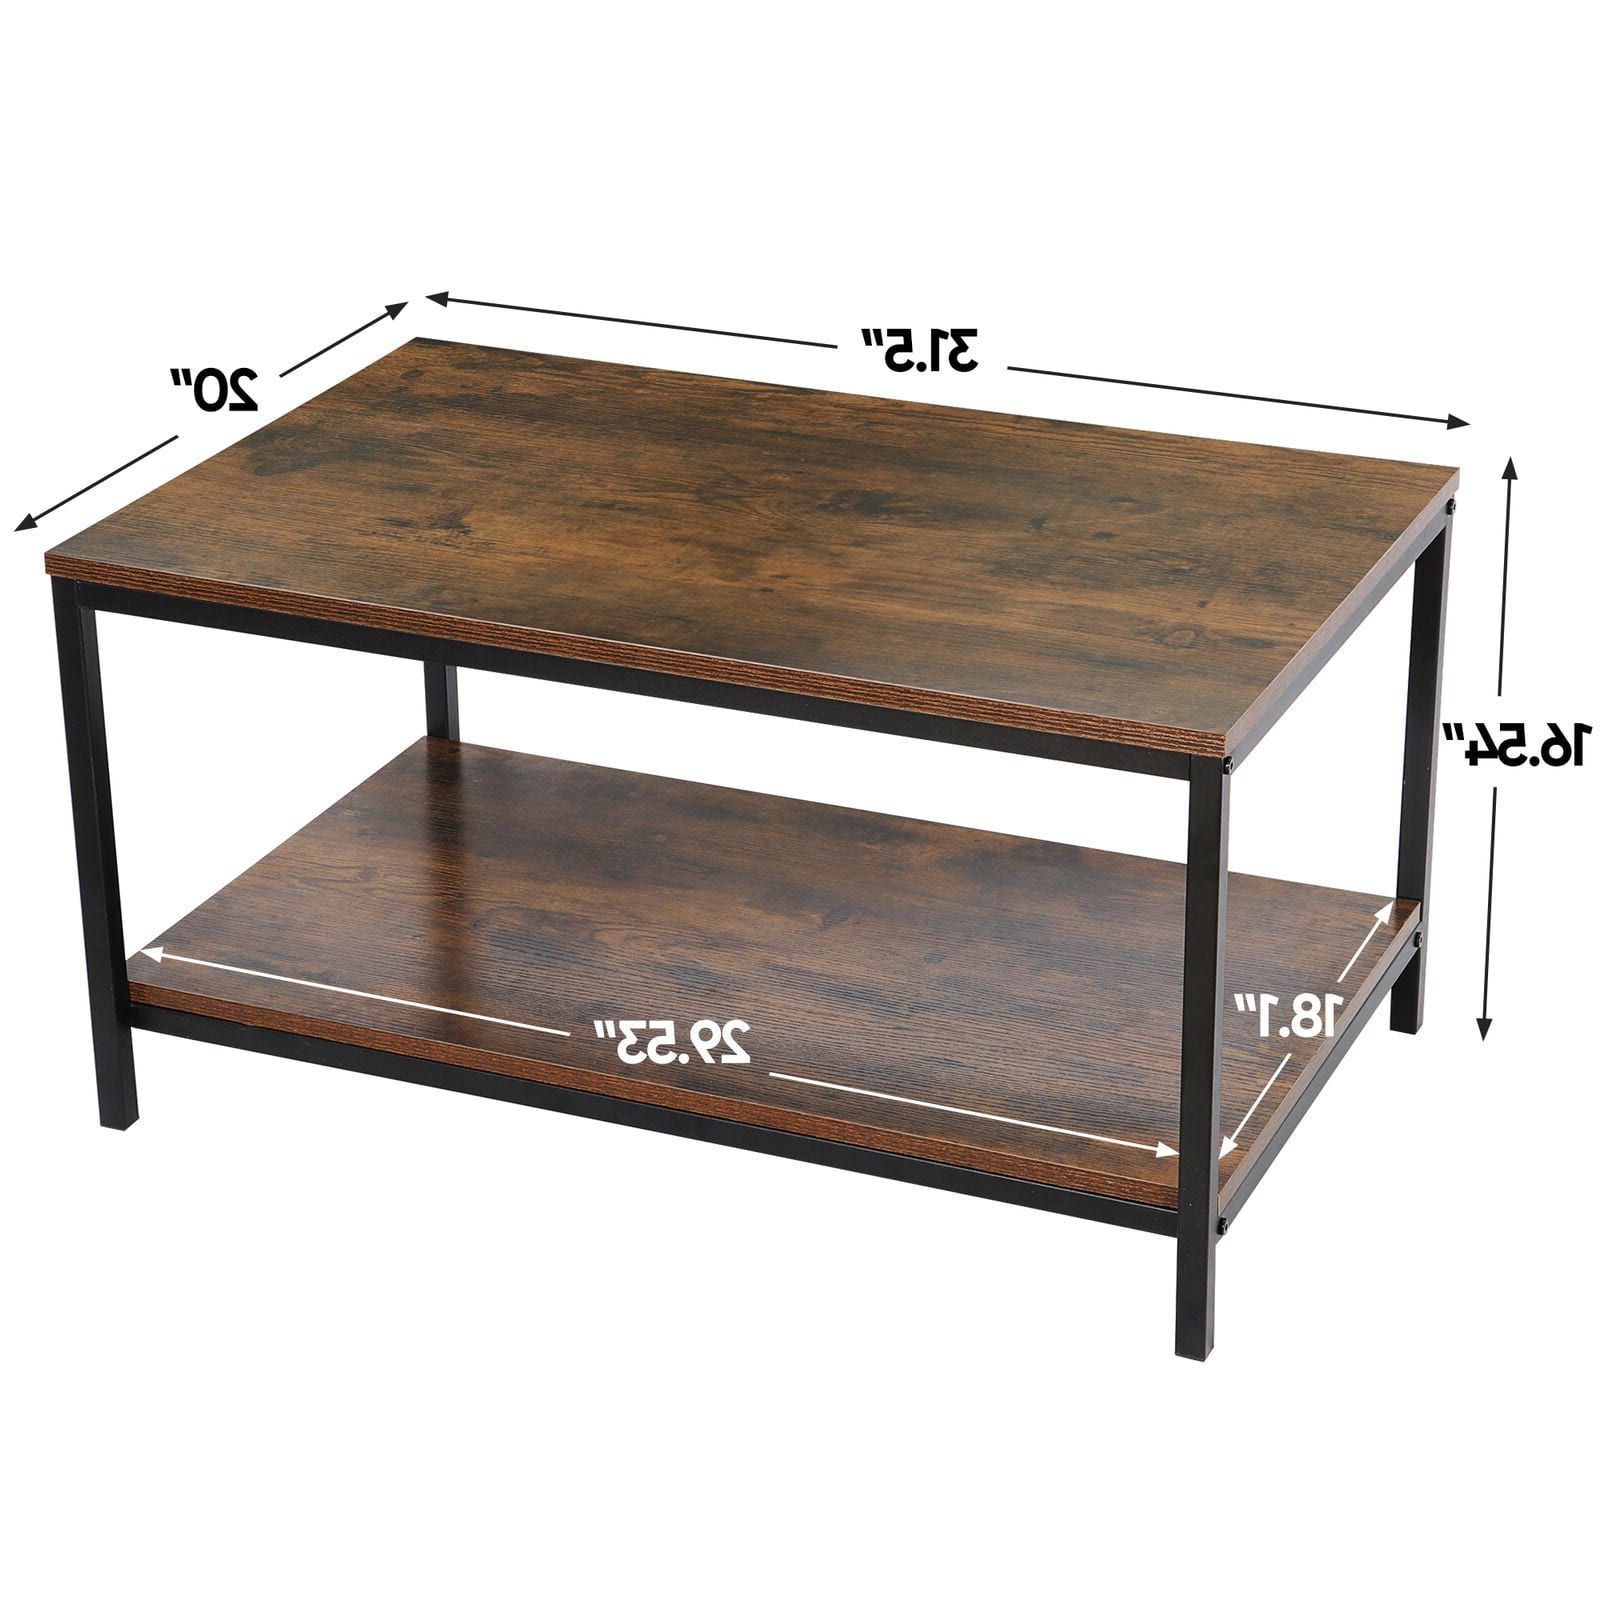 Rustic Wood Coffee Table Rectangular Coffee Table With For 2019 Wood Rectangular Coffee Tables (View 13 of 20)